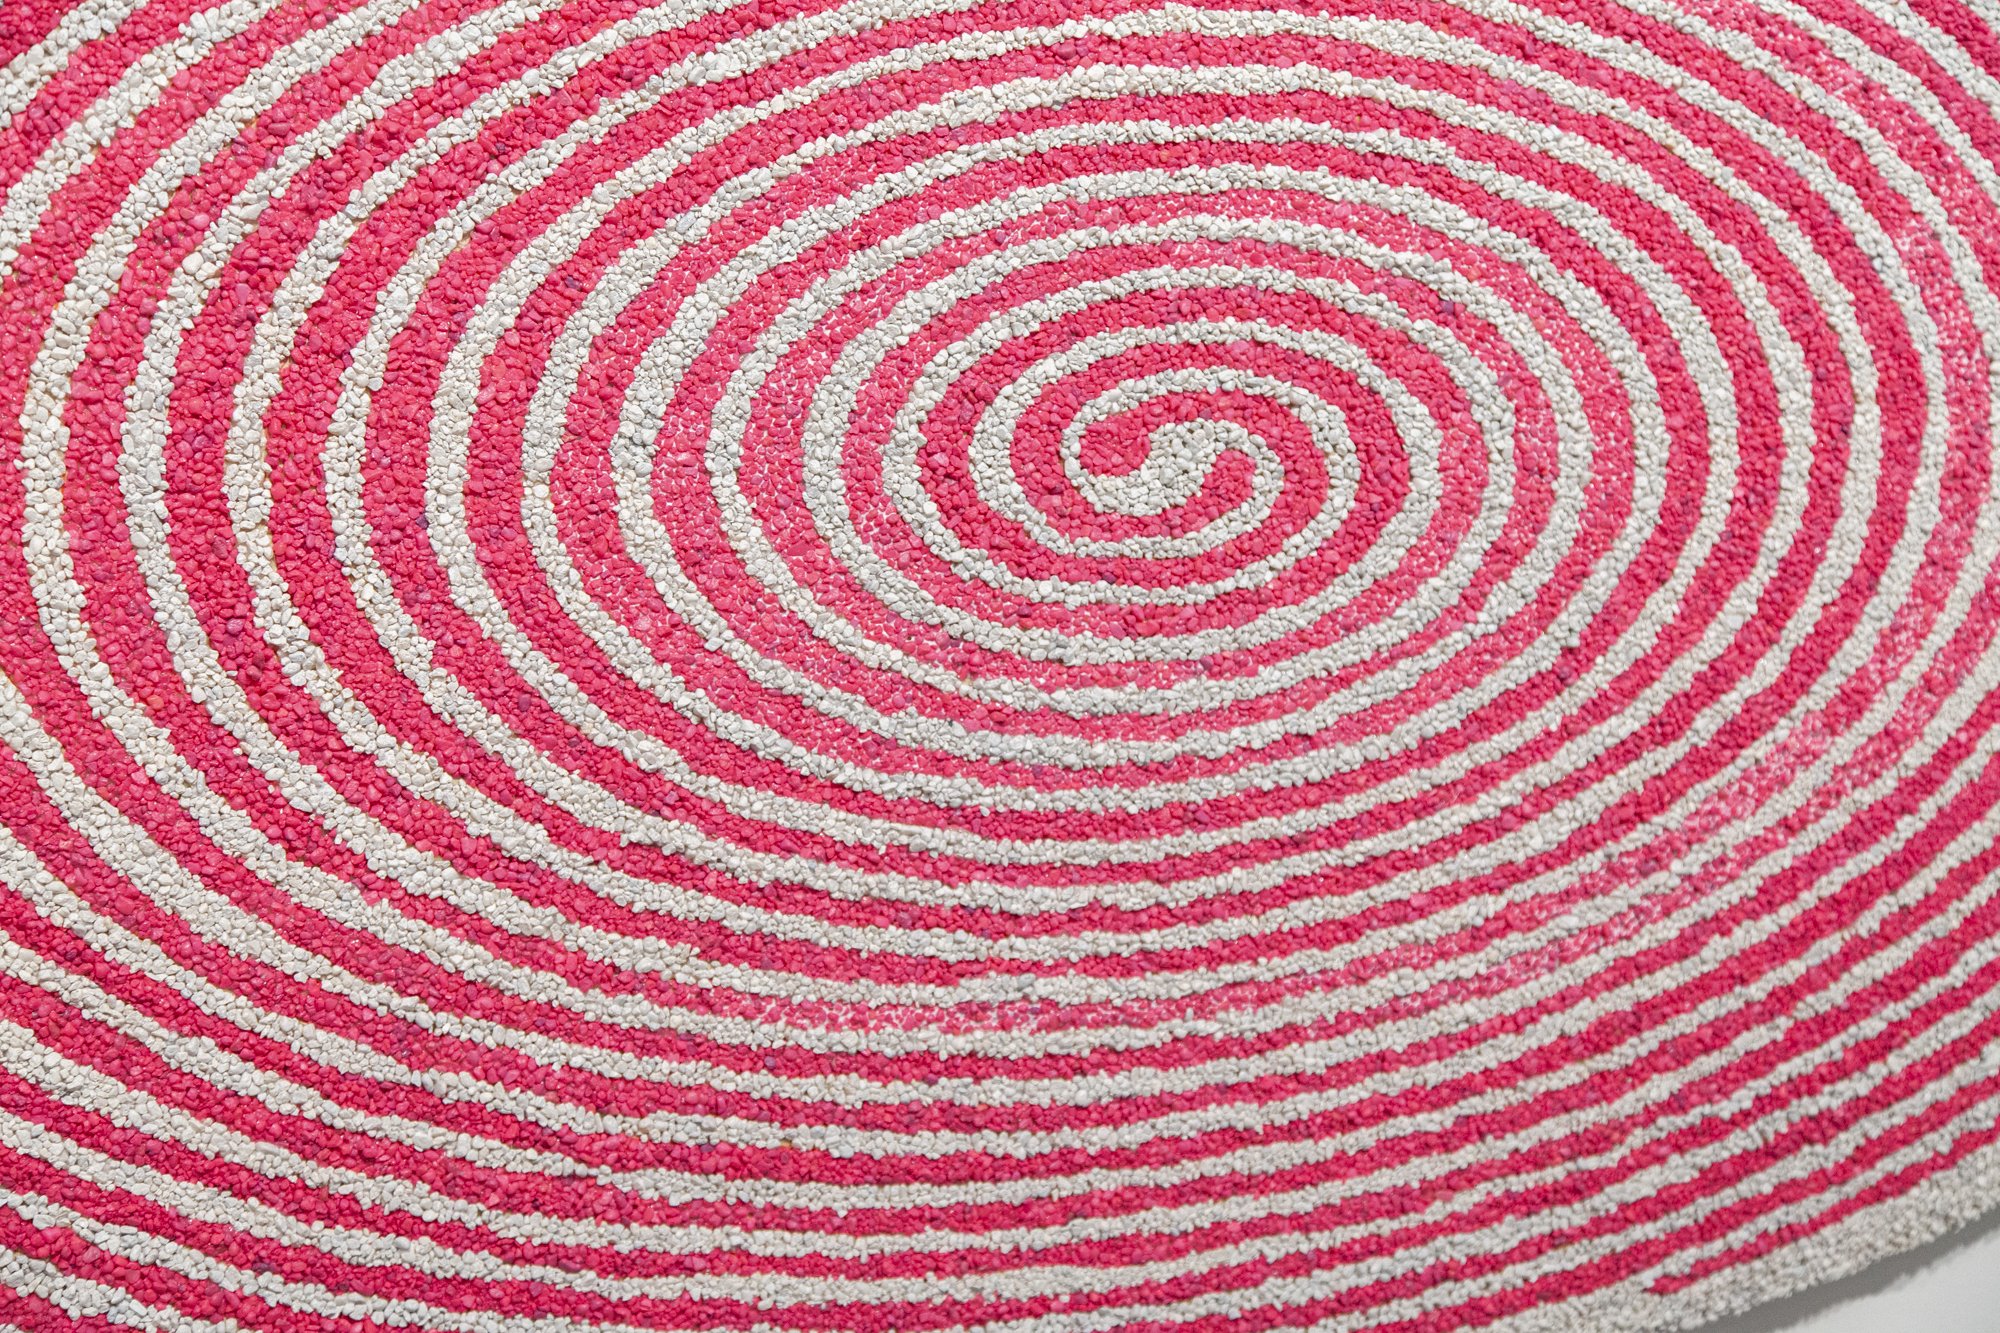  Never Getting Too Close (Pink Spiral)  Plywood, Aquarium rock, Adhesive 47” x 83” x 2” 2015  